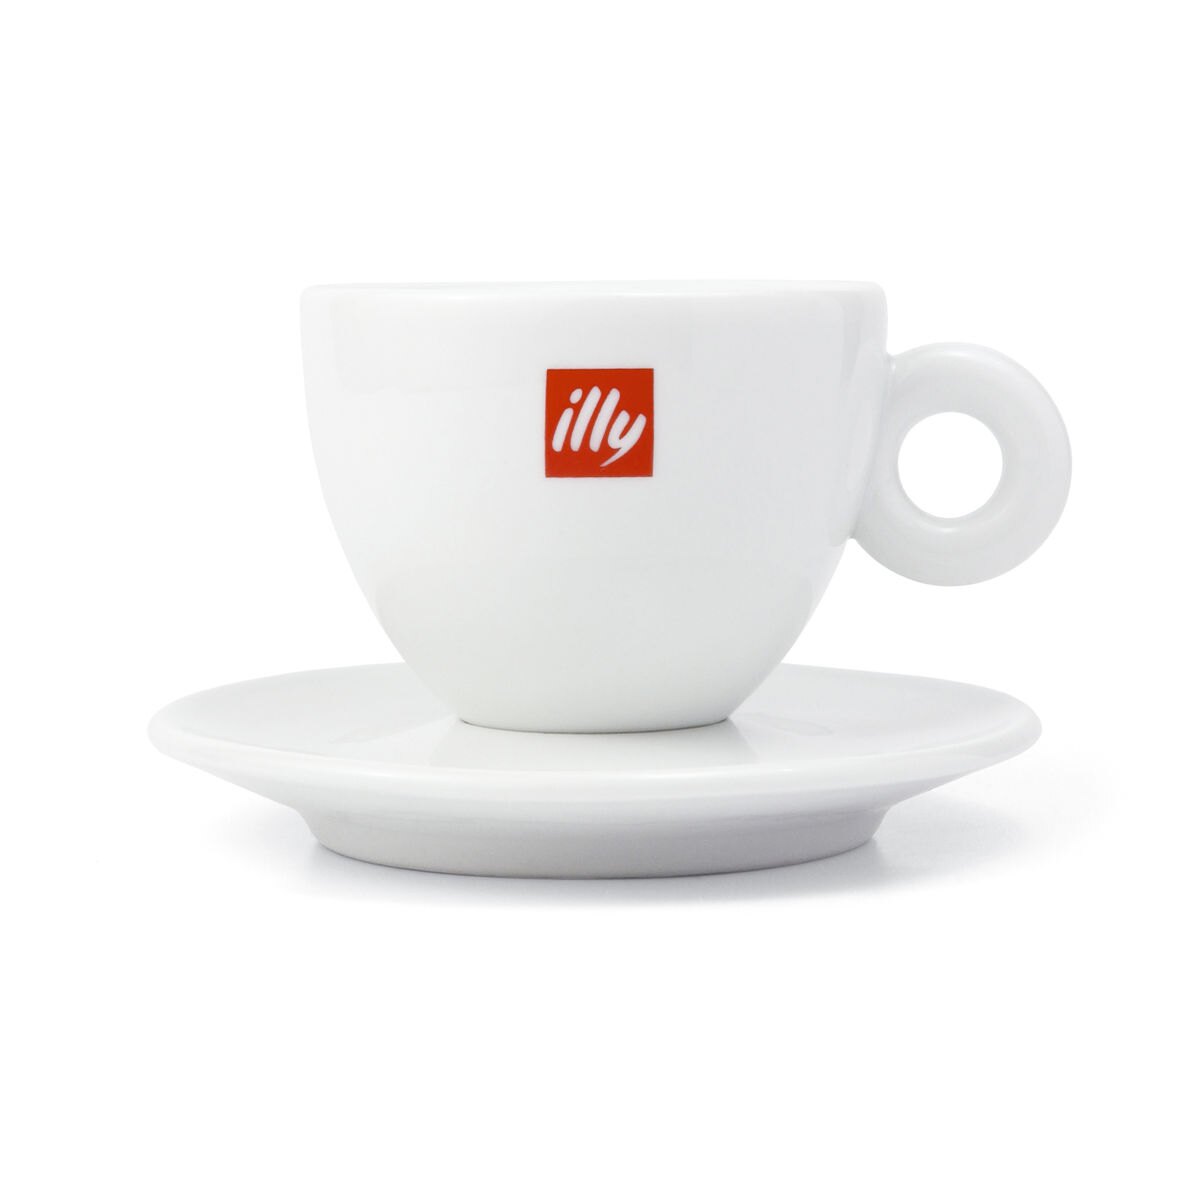 Tasses à cappuccino avec logo illy